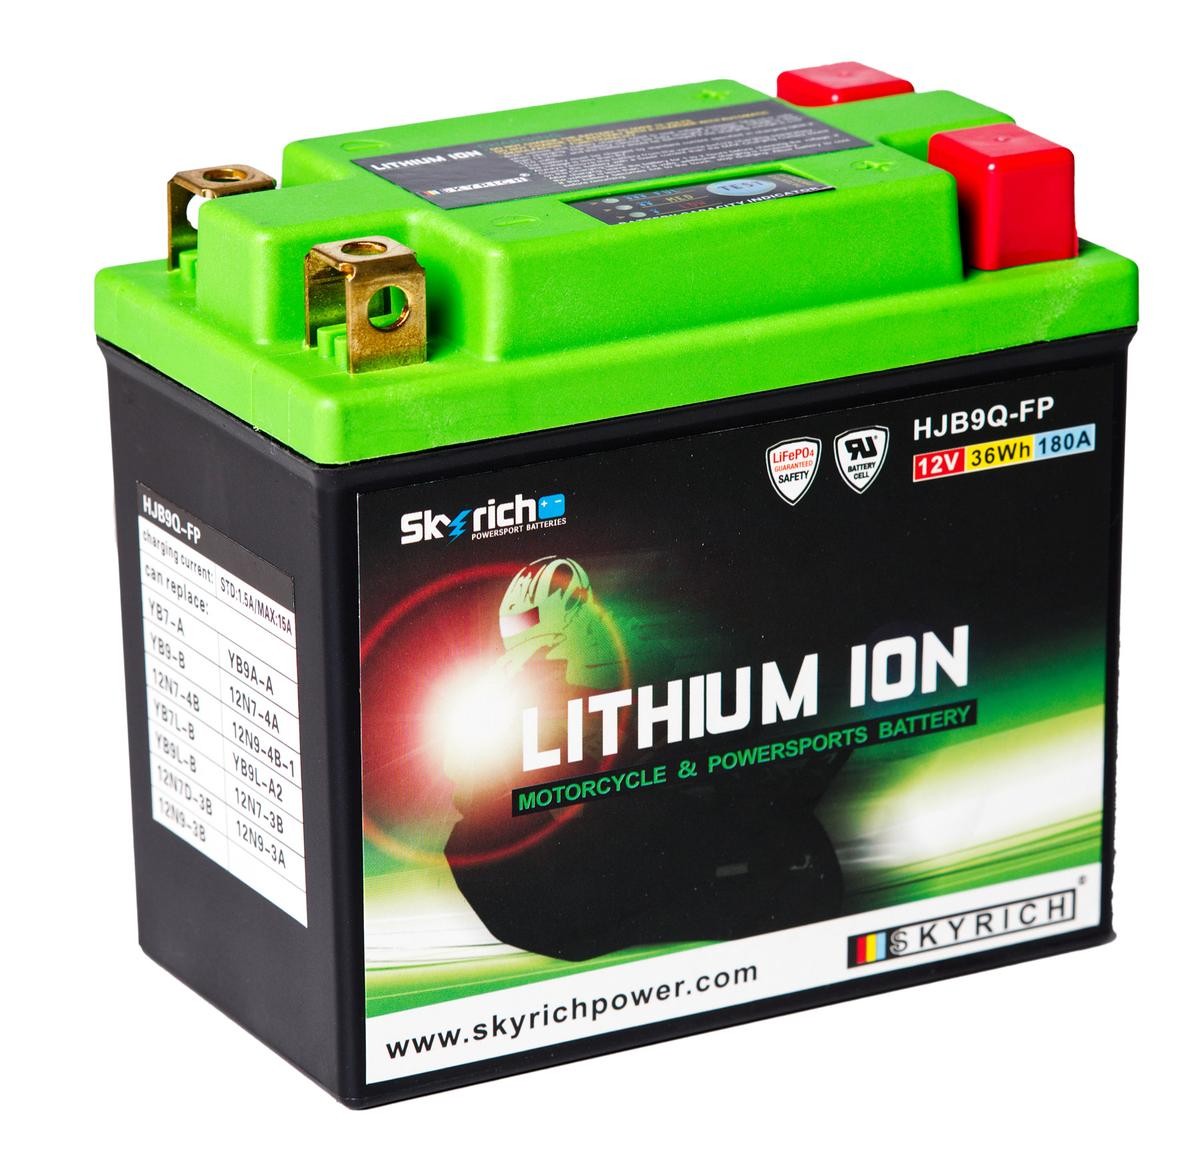 DAELIM VT Batterie 12V 3Ah 180A N Li-Ionen-Batterie SKYRICH LITHIUM ION HJB9Q-FP